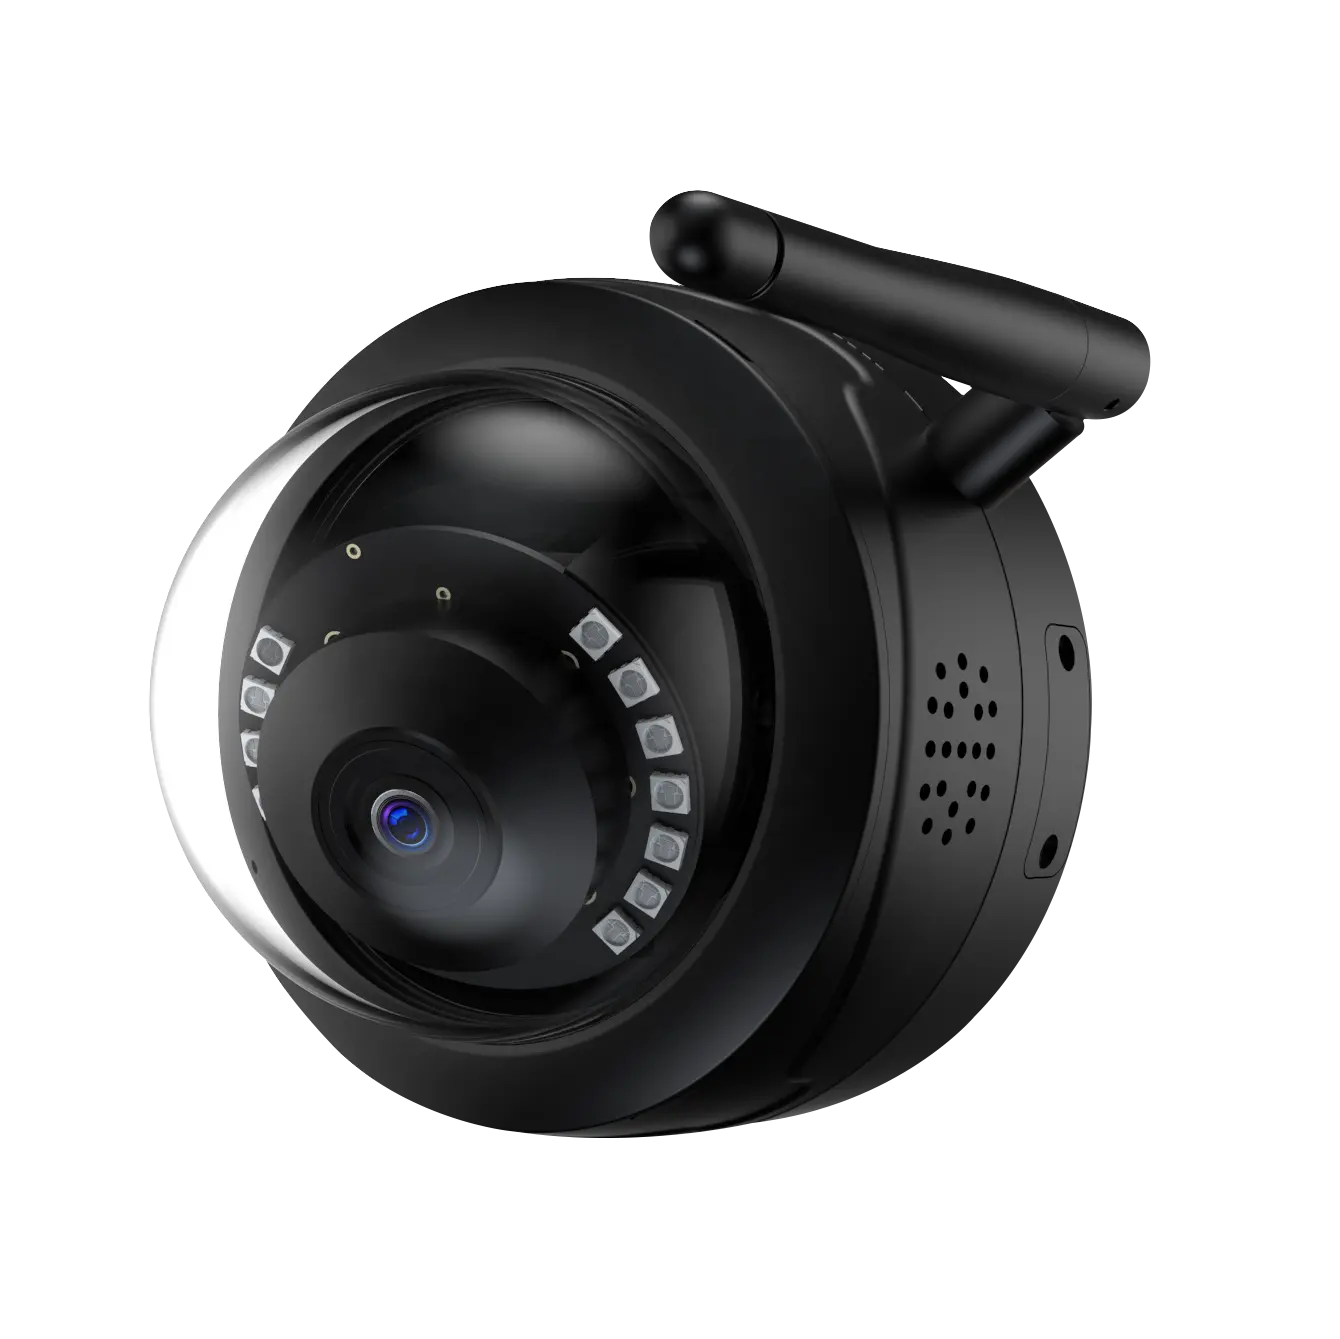 2MP 1080P HD الأمن اللاسلكية نظام الدائرة التلفزيونية المغلقة 1080P المنزل الذكي في الهواء الطلق للرؤية الليلية للماء واي فاي IP كاميرا بشكل قبة